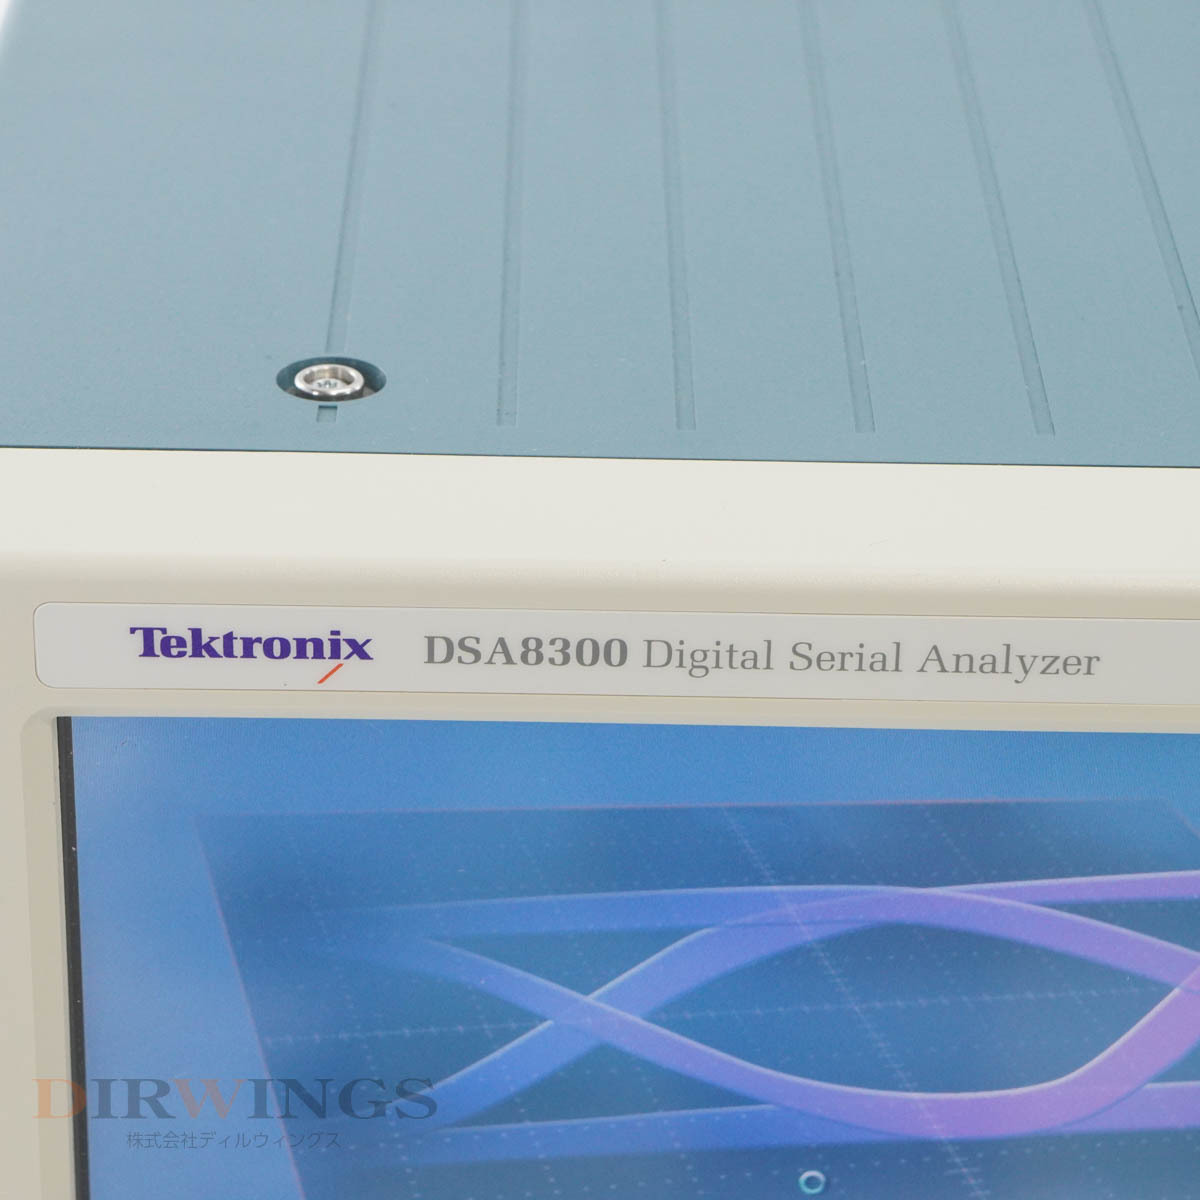 [DW] 8 день гарантия DSA8300 Tektronix Digital Serial Analyzer OPT JNB01 ADVTRIG 80C10C 82A04 tech Toro niks цифровой si задний...[05791-0447]